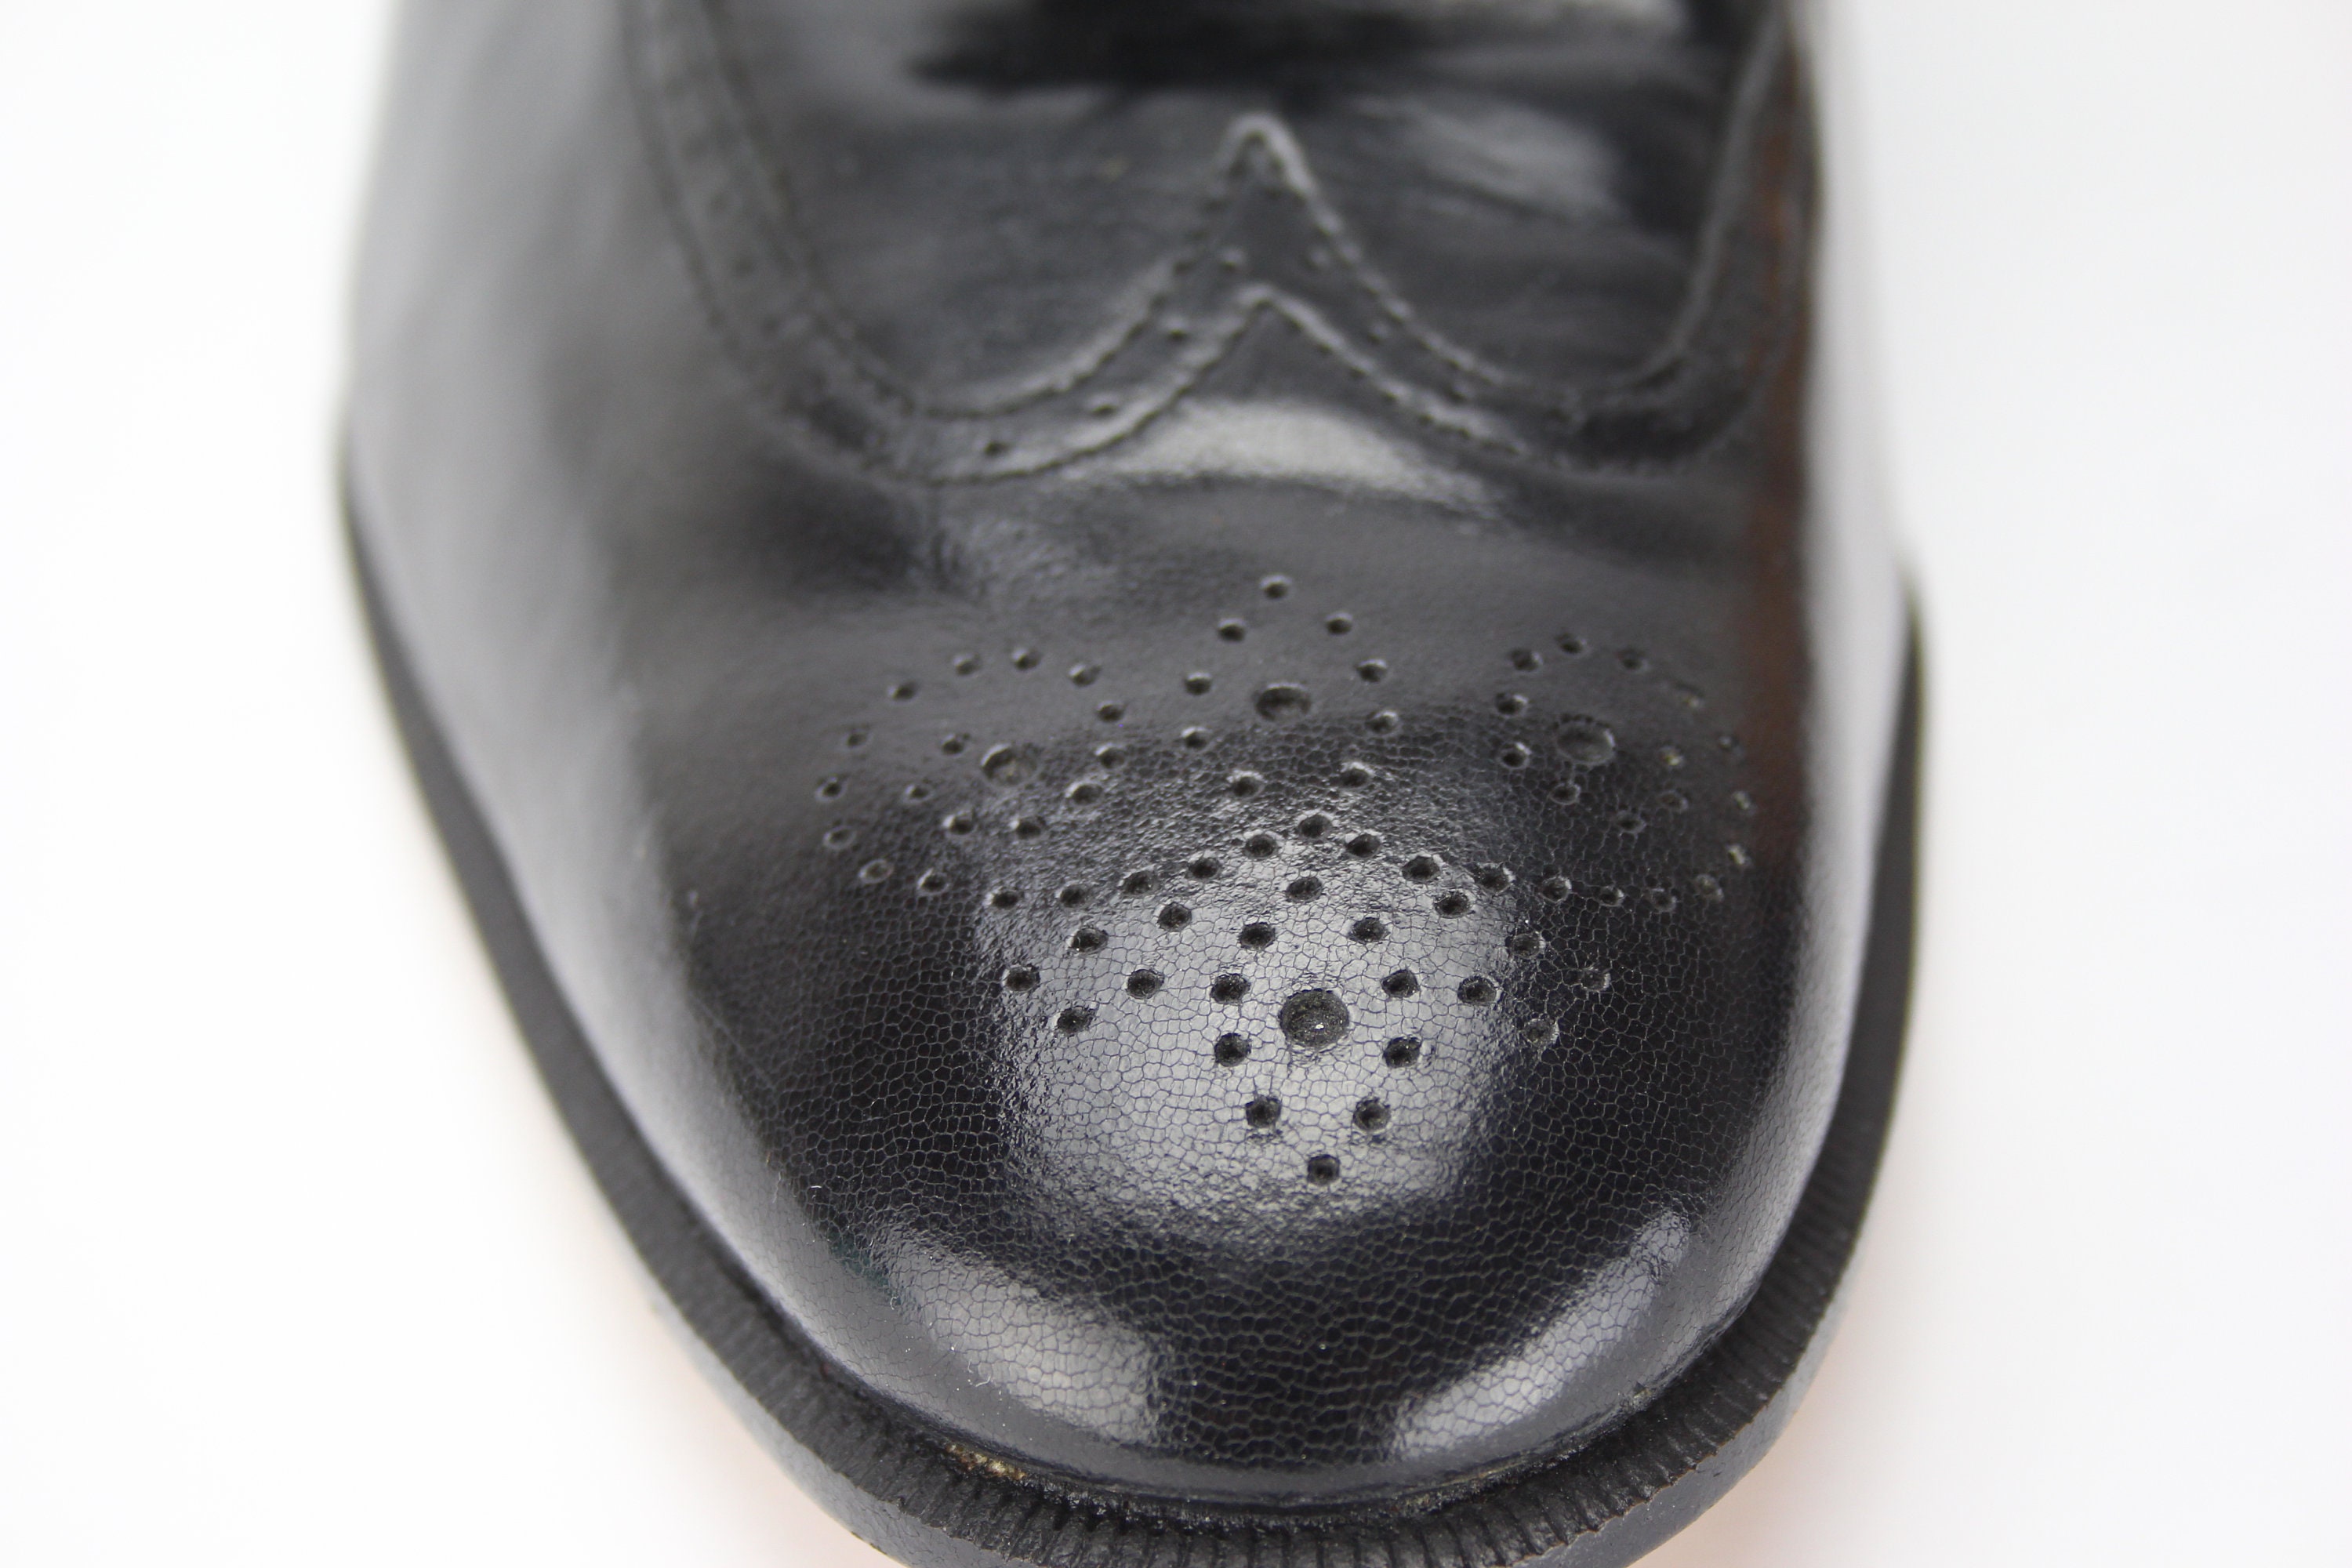 NEW Vintage Bostonian Black Leather Wingtip Men's Shoes - Etsy